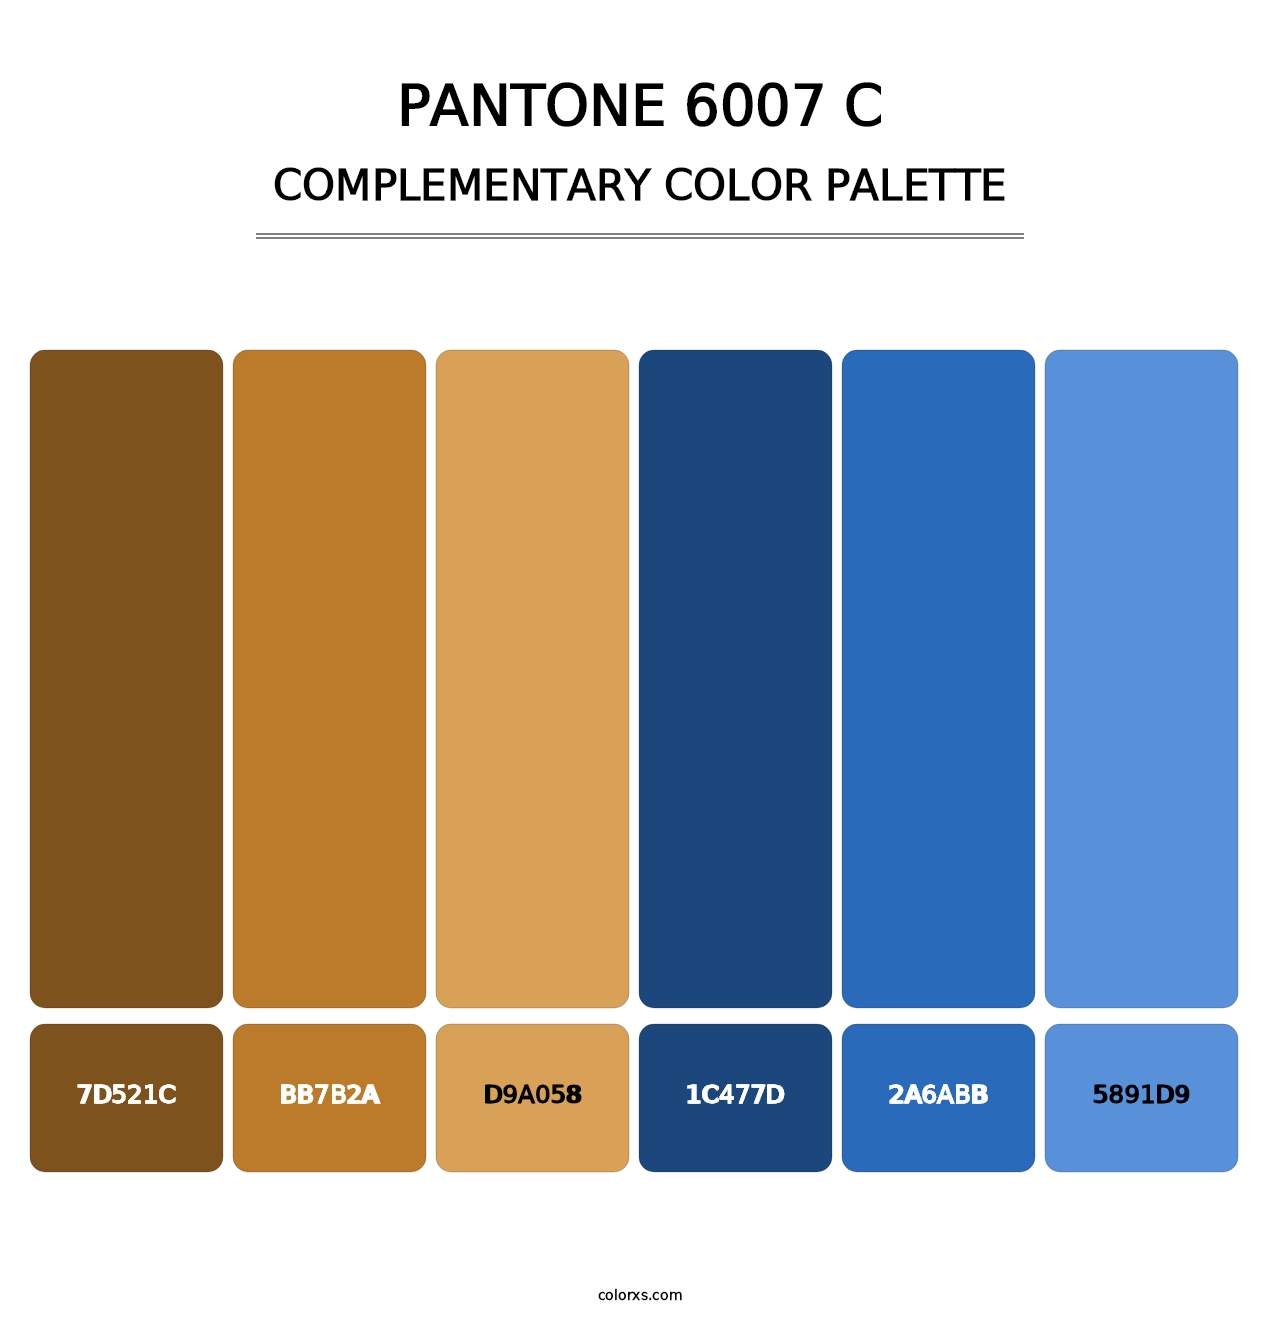 PANTONE 6007 C - Complementary Color Palette